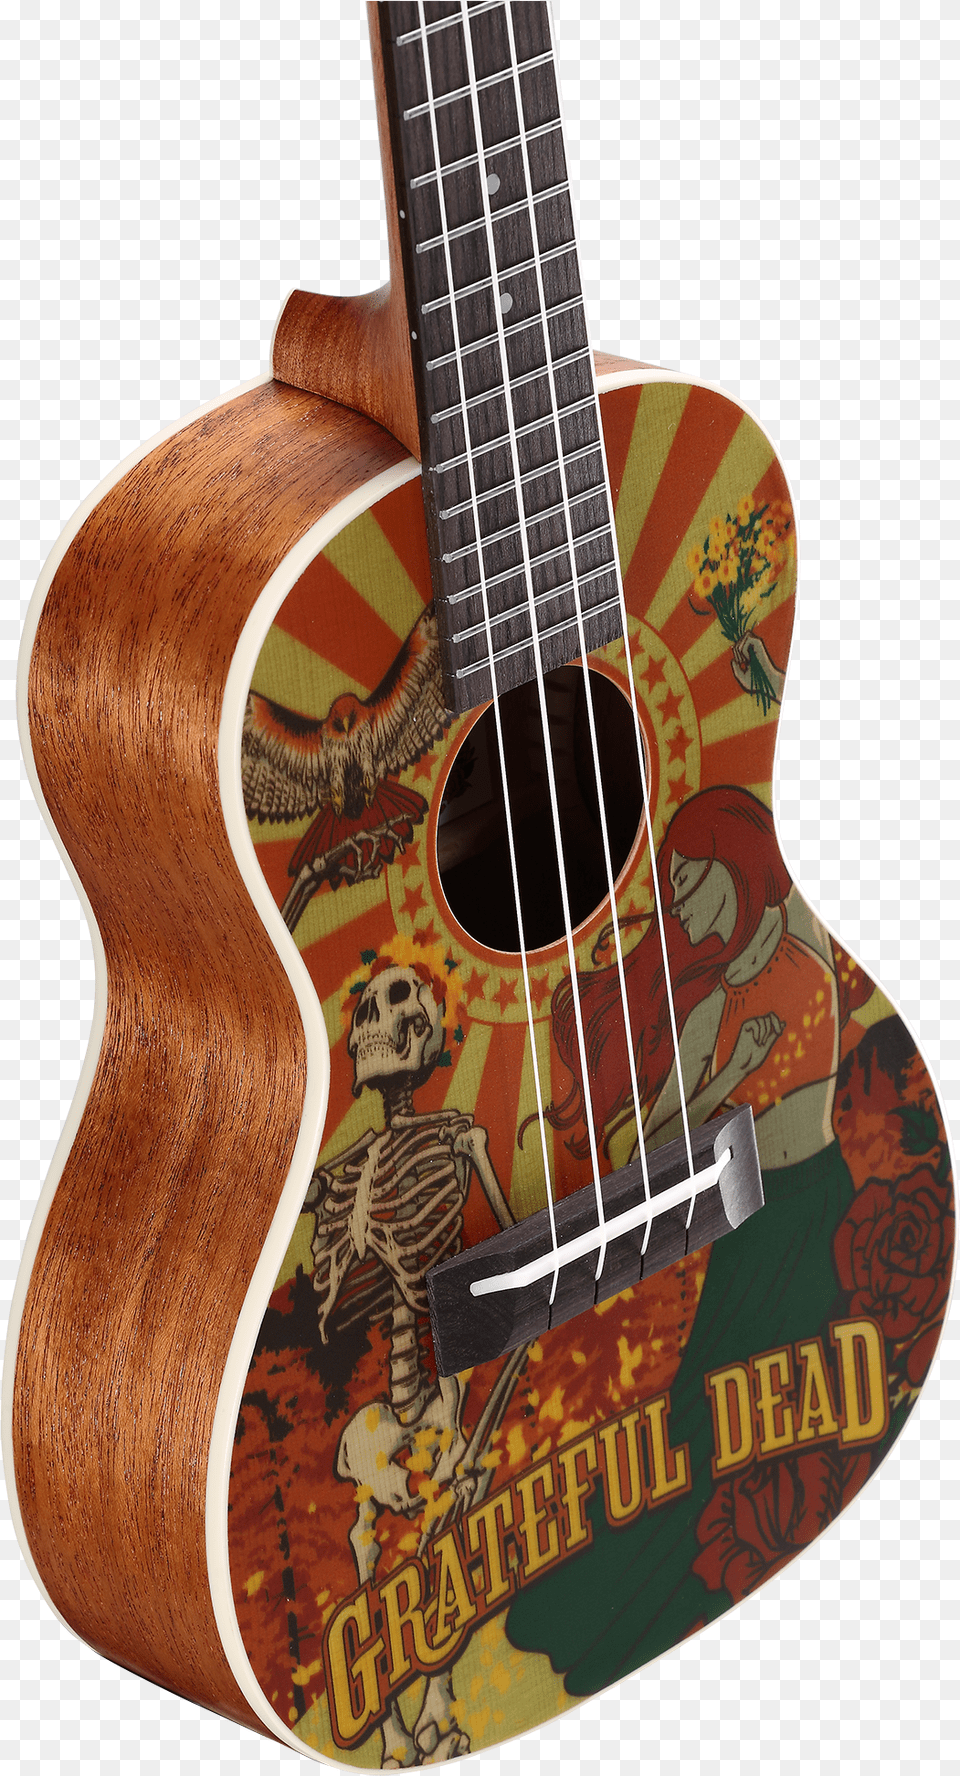 The Alvarez Grateful Dead Grateful Dead Ukulele, Bass Guitar, Guitar, Musical Instrument, Person Png Image